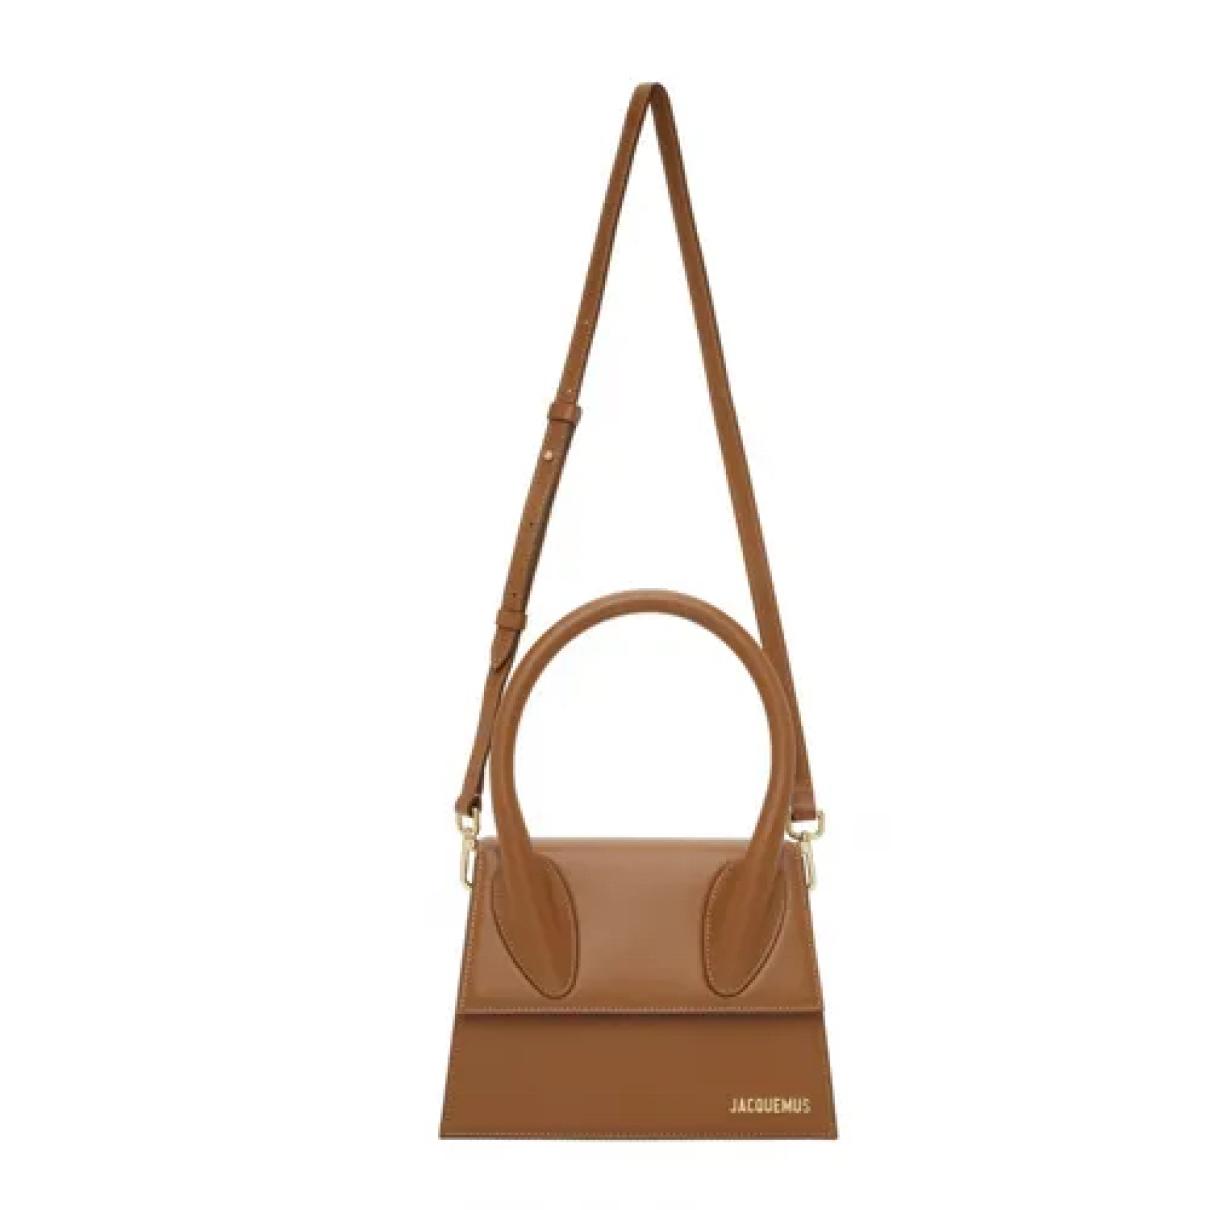 Chiquito leather handbag - 5